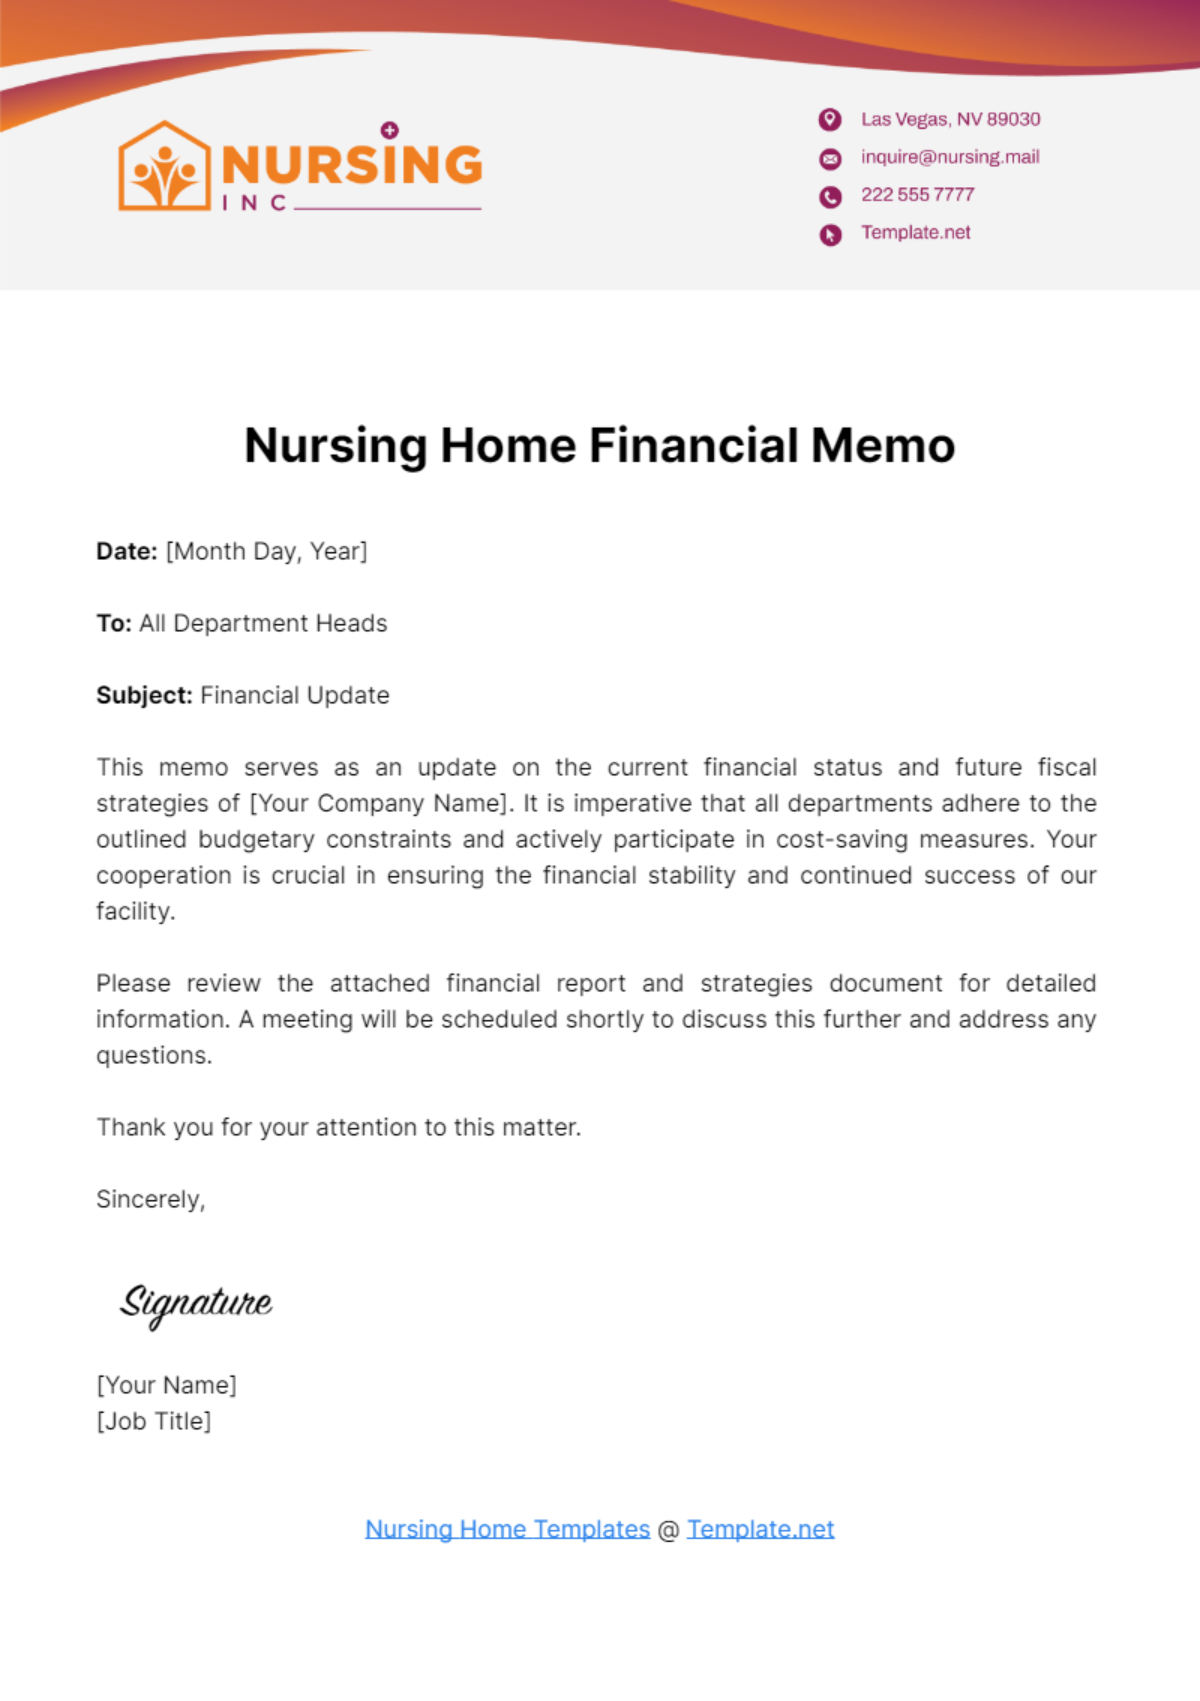 Nursing Home Financial Memo Template